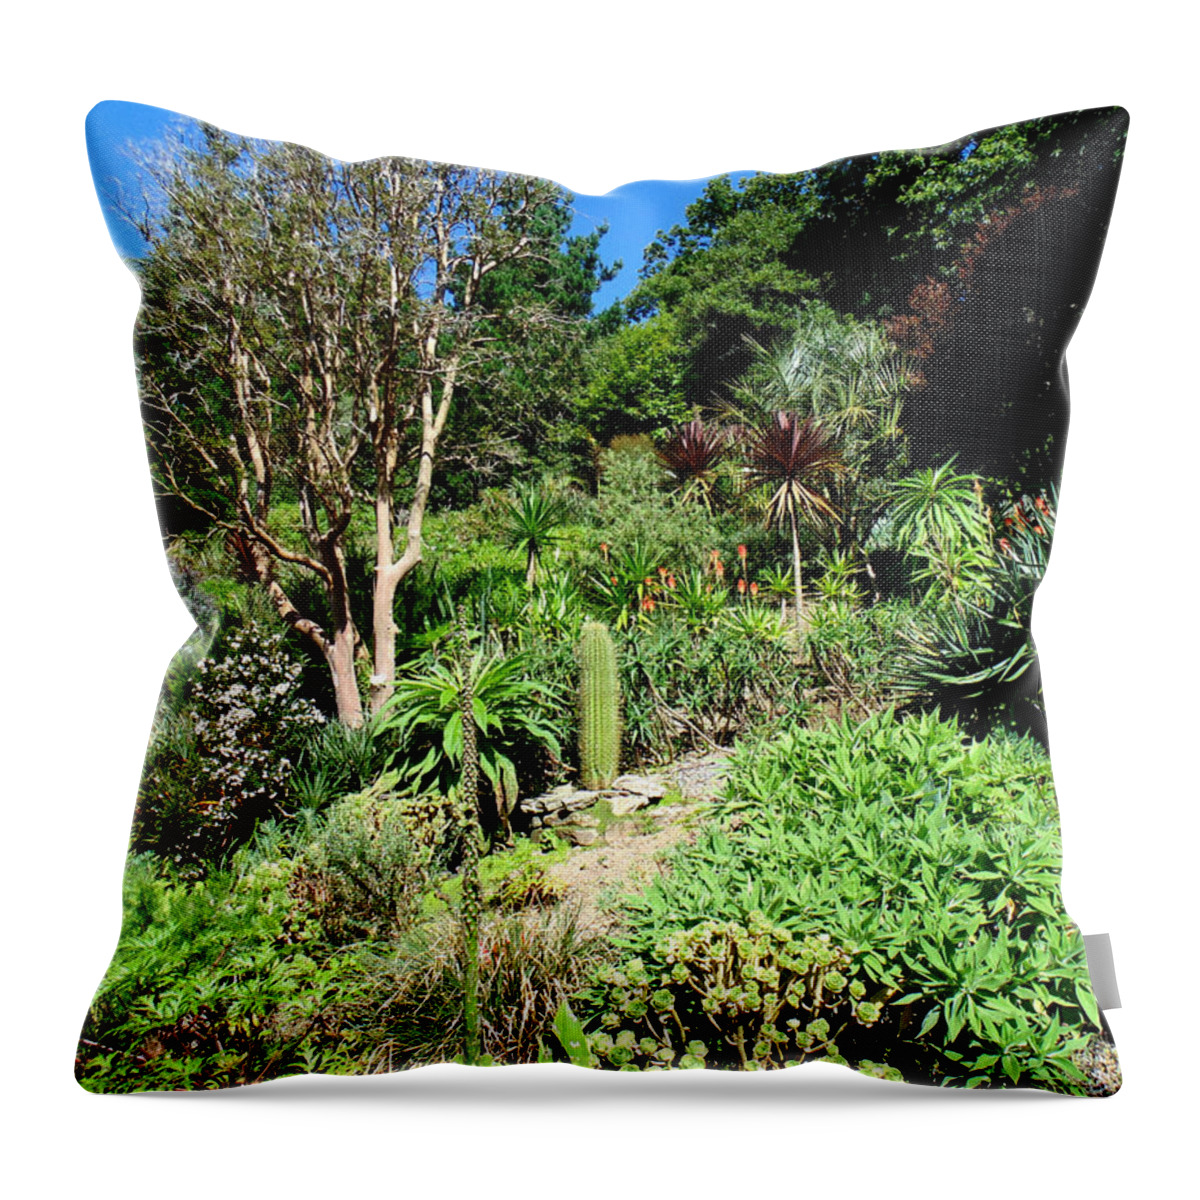 Coleton Fishacre Throw Pillow featuring the photograph Coleton Fisacre Gardens, Brixham, Devon by Mackenzie Moulton